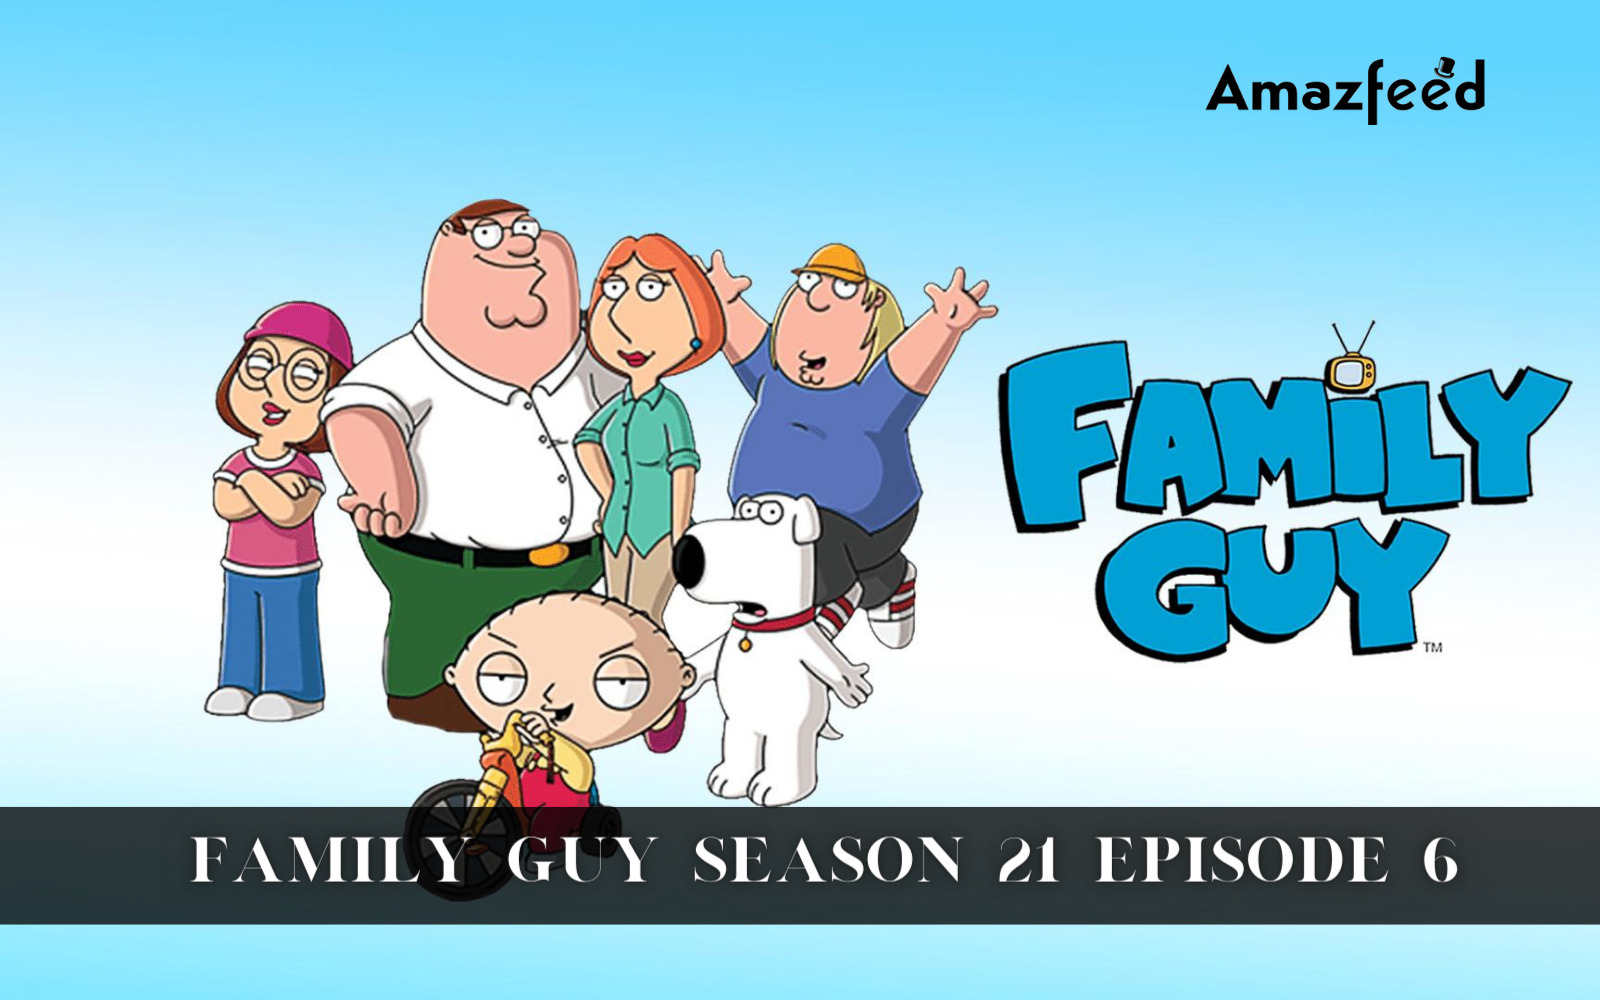 Family Guy Season 21 Episode 6 ⇒ Countdown, Release Date, Spoilers - Family Guy Season 20 Episode 10 Disney Plus